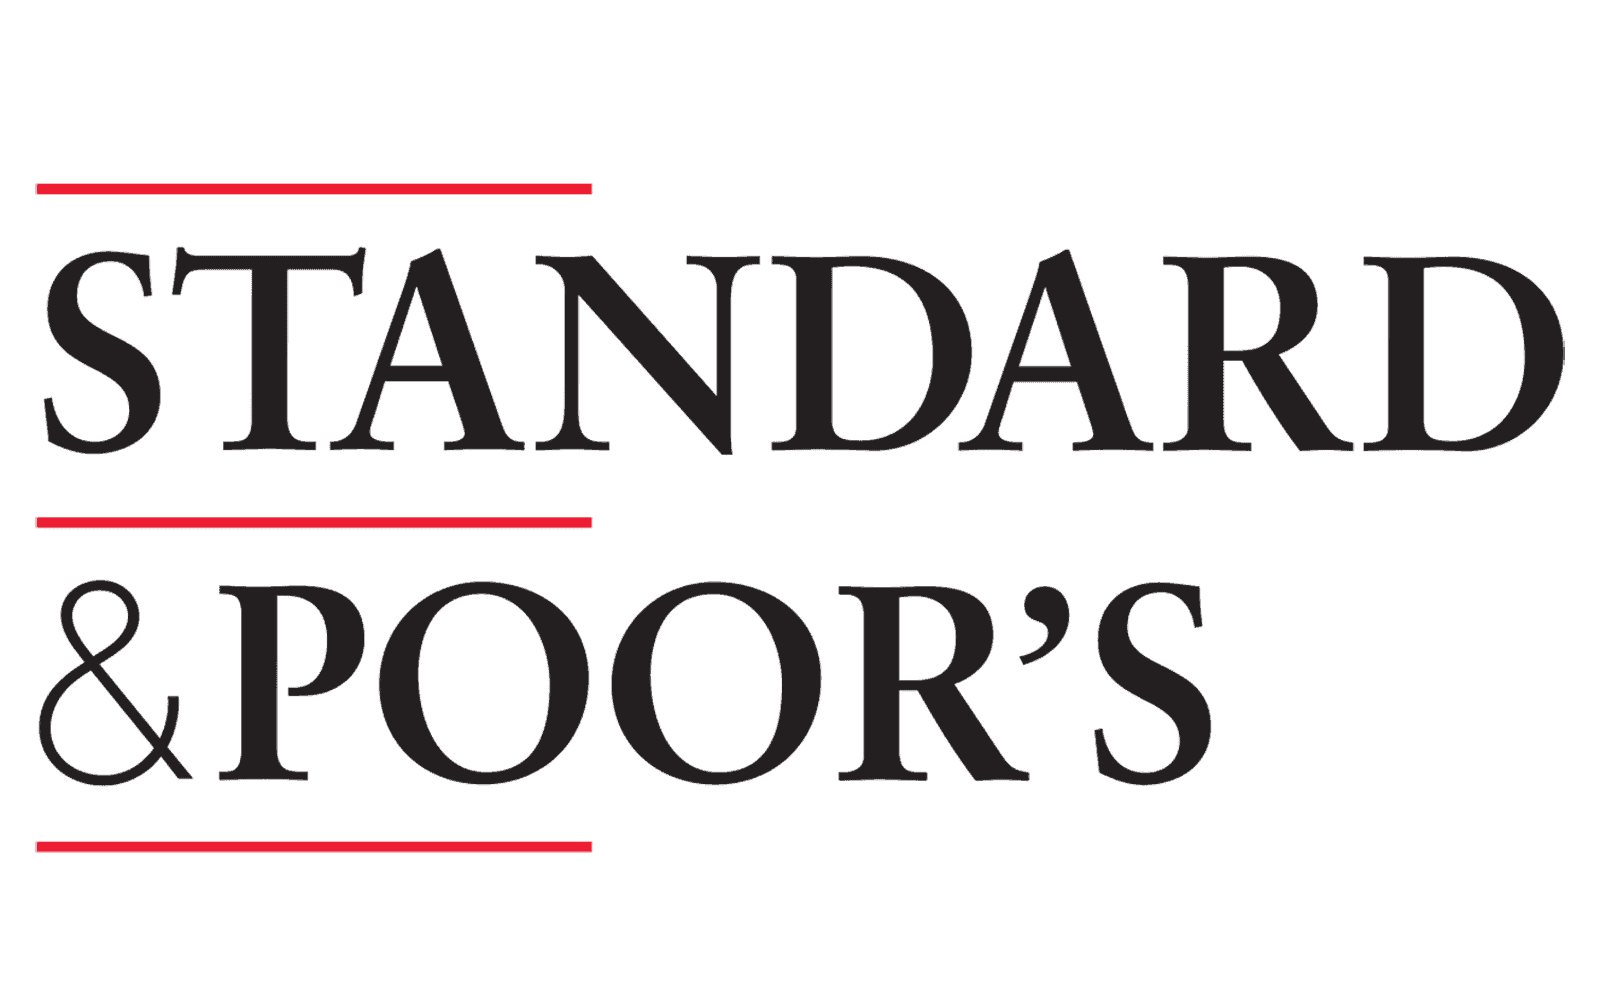 S p россии. Standard and poors logo. Standard & poor’s. Standard poor s логотип. Рейтинговое агентство Standard poor's.